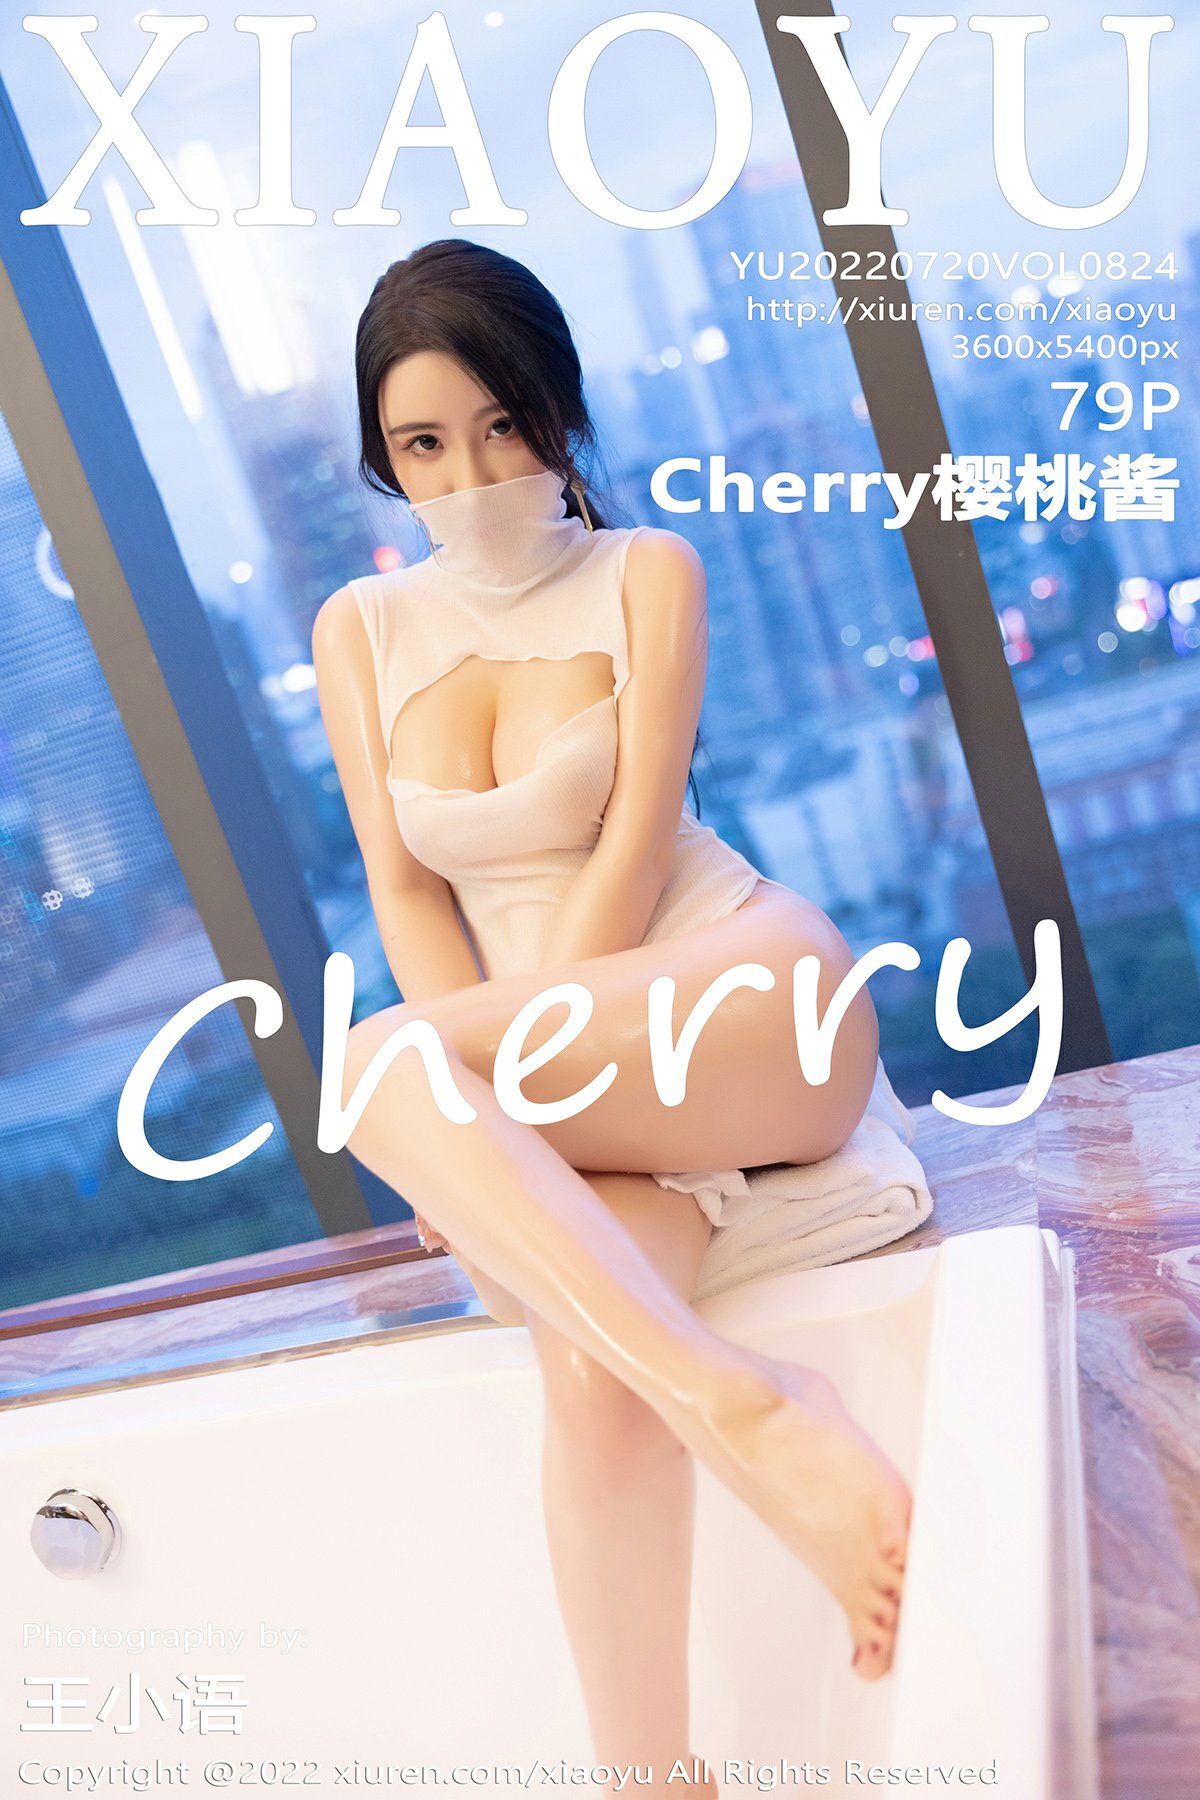 [XIAOYU语画界] 2022.07.20 VOL.824 Cherry樱桃酱 [79P206MB]